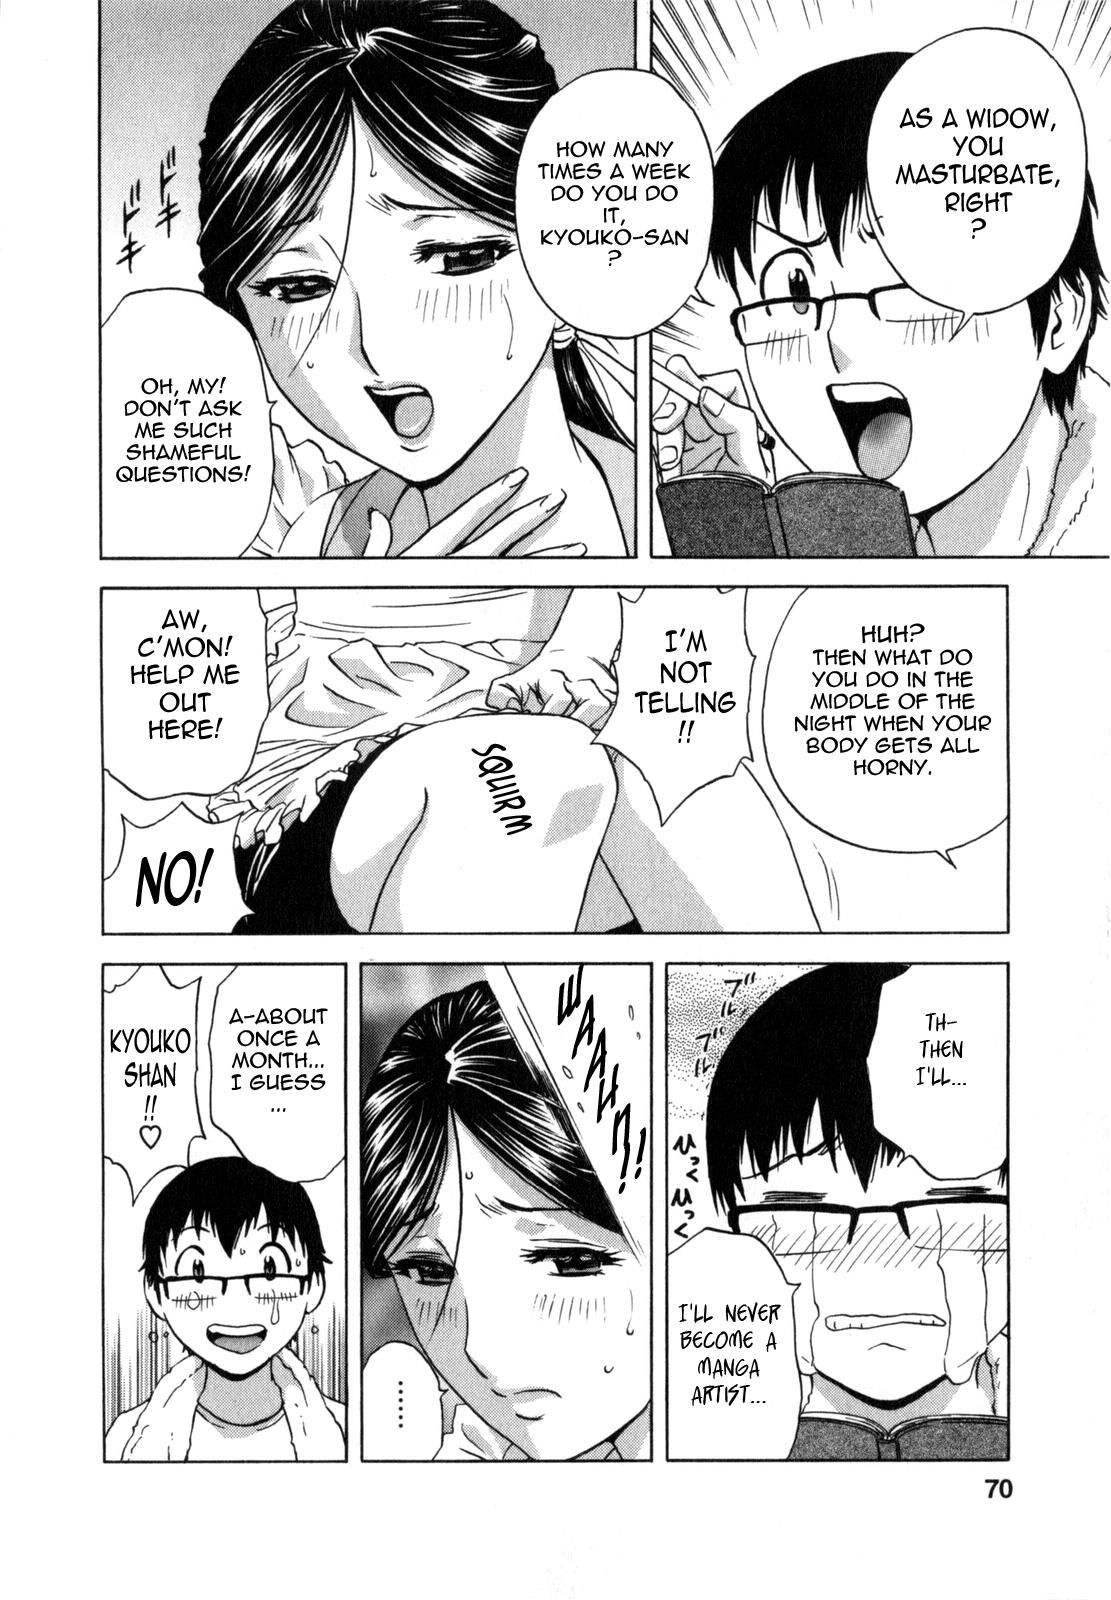 [Hidemaru] Life with Married Women Just Like a Manga 1 - Ch. 1-4 [English] {Tadanohito} 73